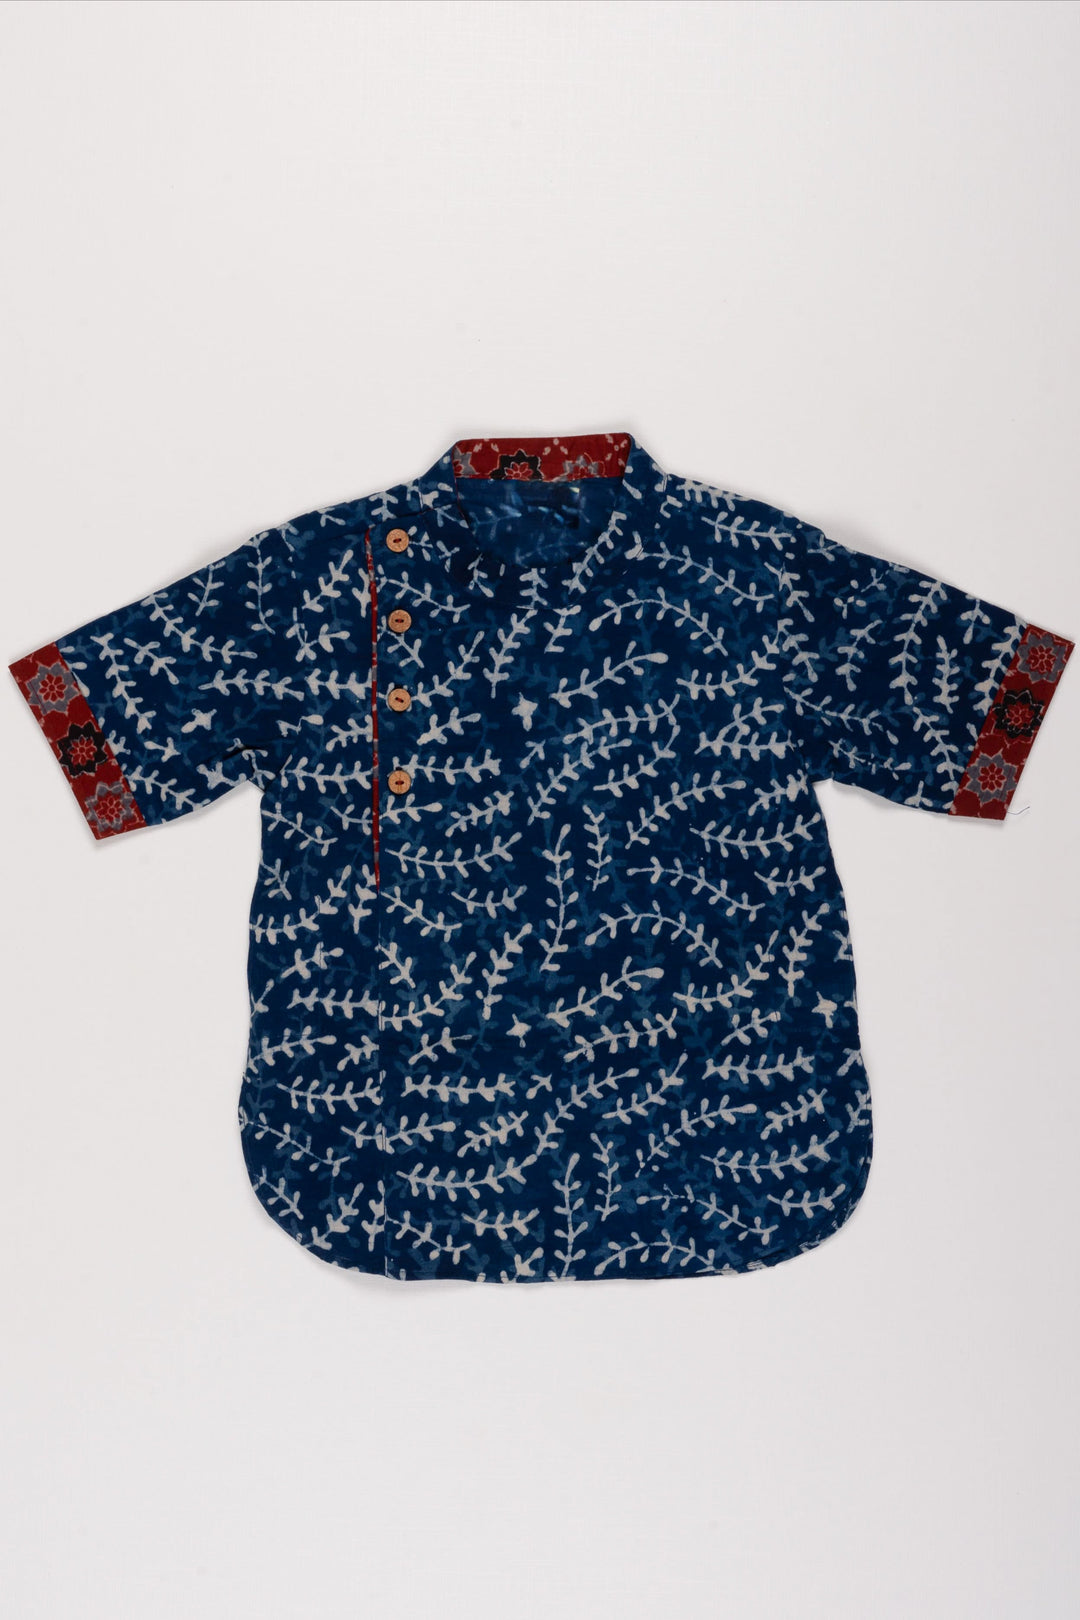 The Nesavu Boys Kurtha Shirt Boys Nature-Inspired Vine Patterned Blue Cotton Shirt with Contrasting Cuff Nesavu 16 (1Y) / Blue / Cotton BS118A-16 Shop Trendy Boys Kurta Shirts | High-Quality Cotton Ethnic Wear | The Nesavu